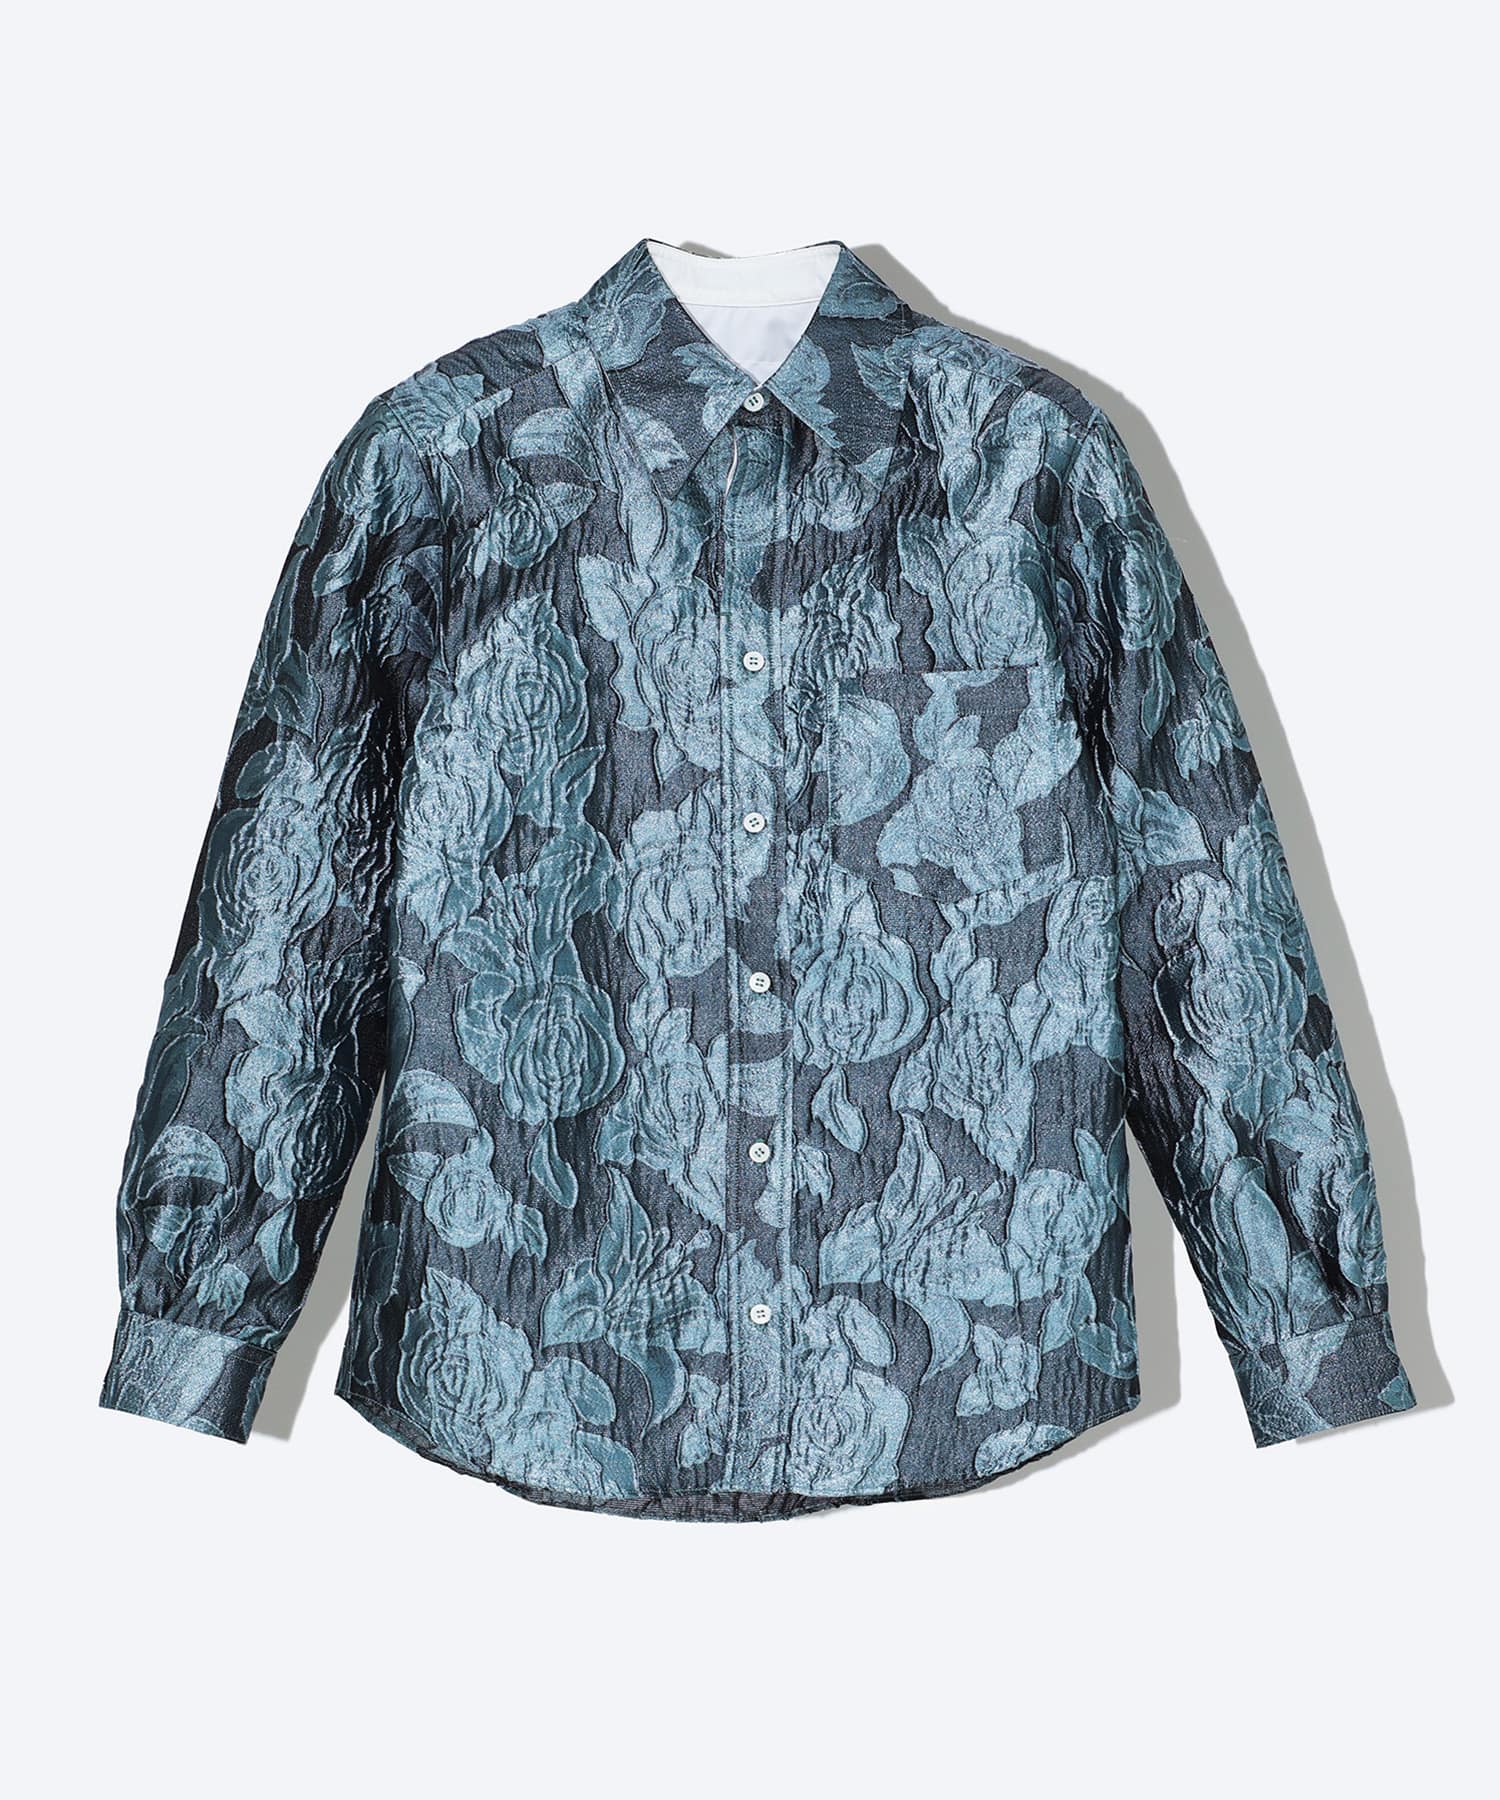 Polyester jacquard shirt